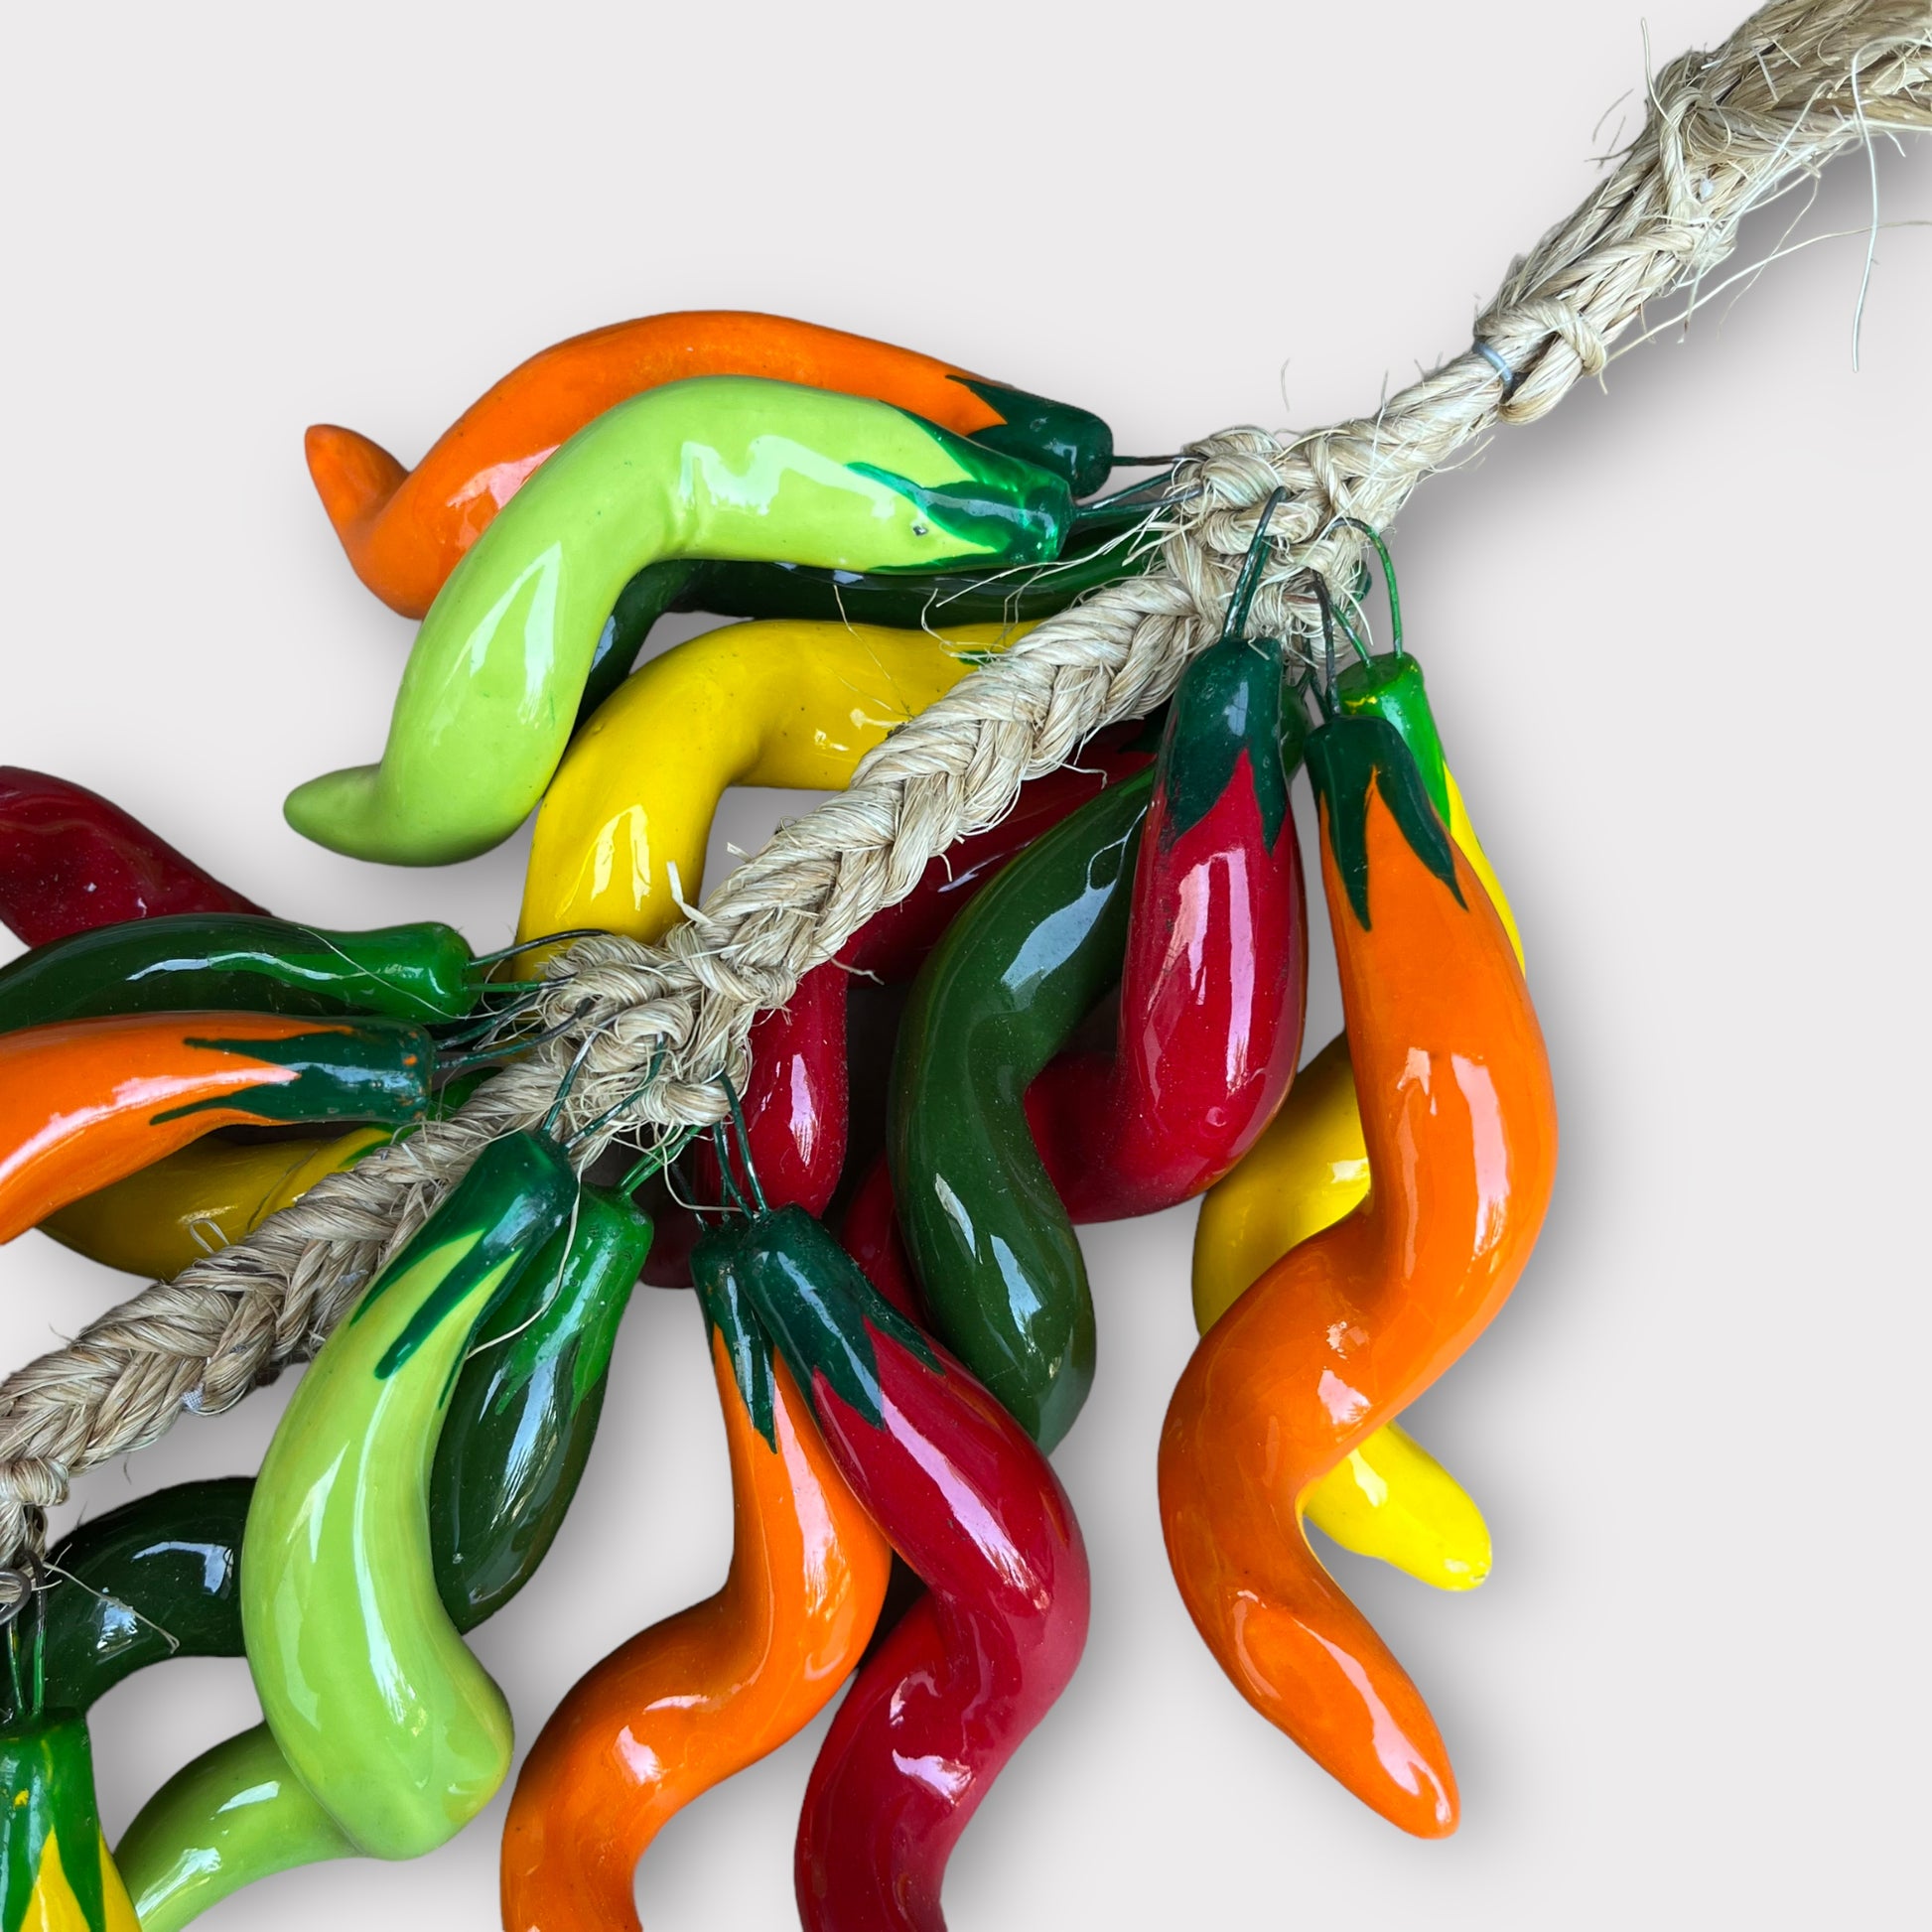 Mexican Ceramic Multi Color Chili Peppers close up